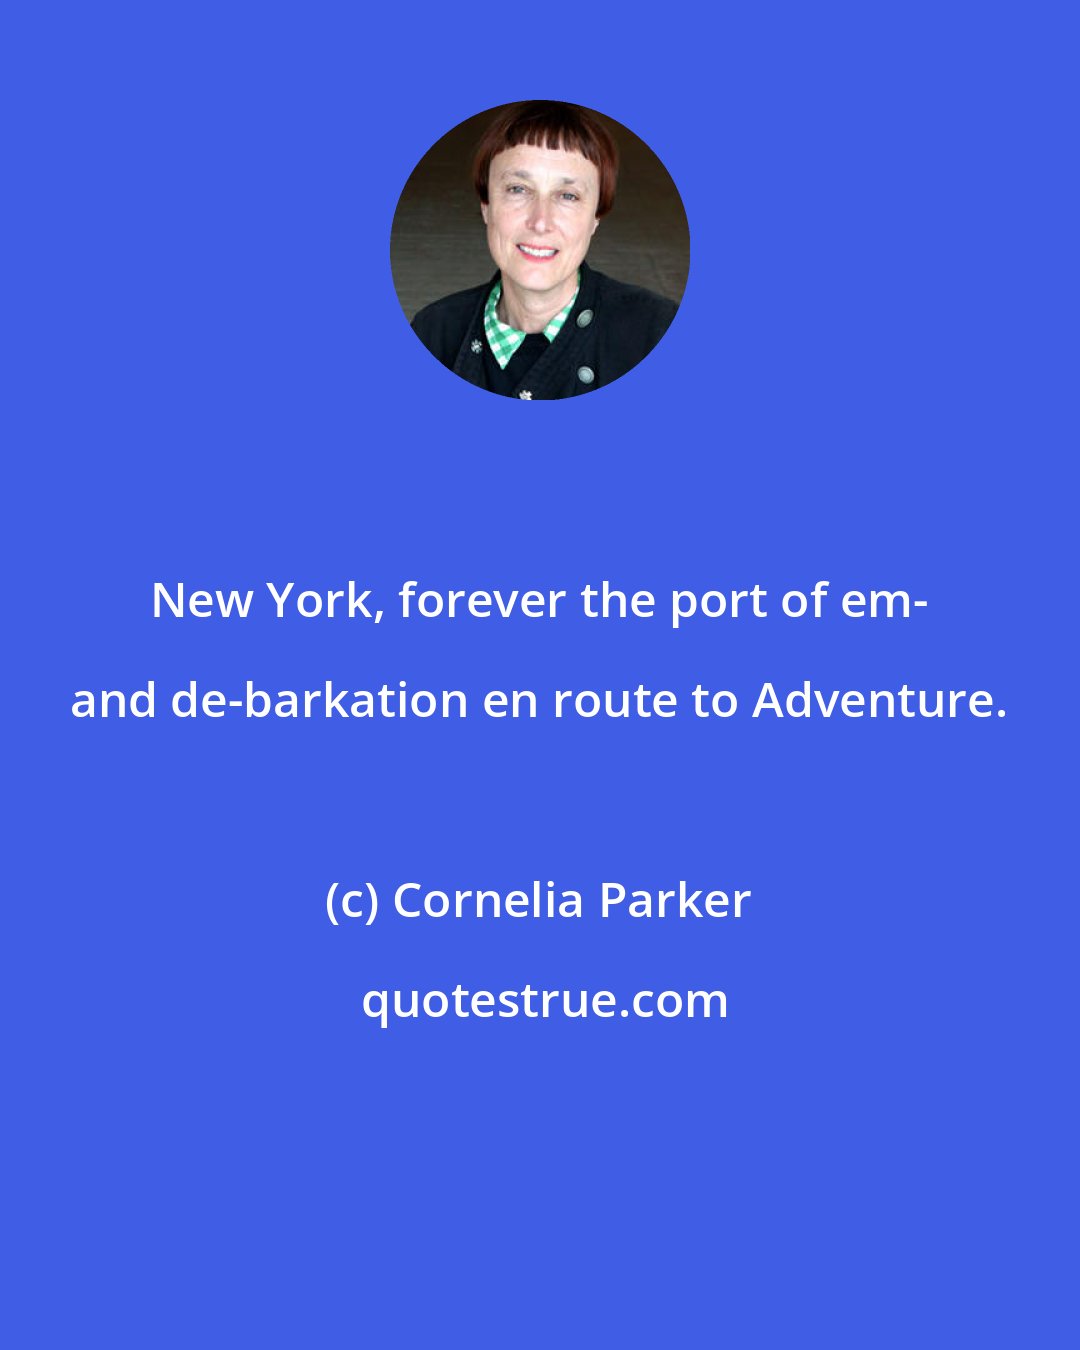 Cornelia Parker: New York, forever the port of em- and de-barkation en route to Adventure.